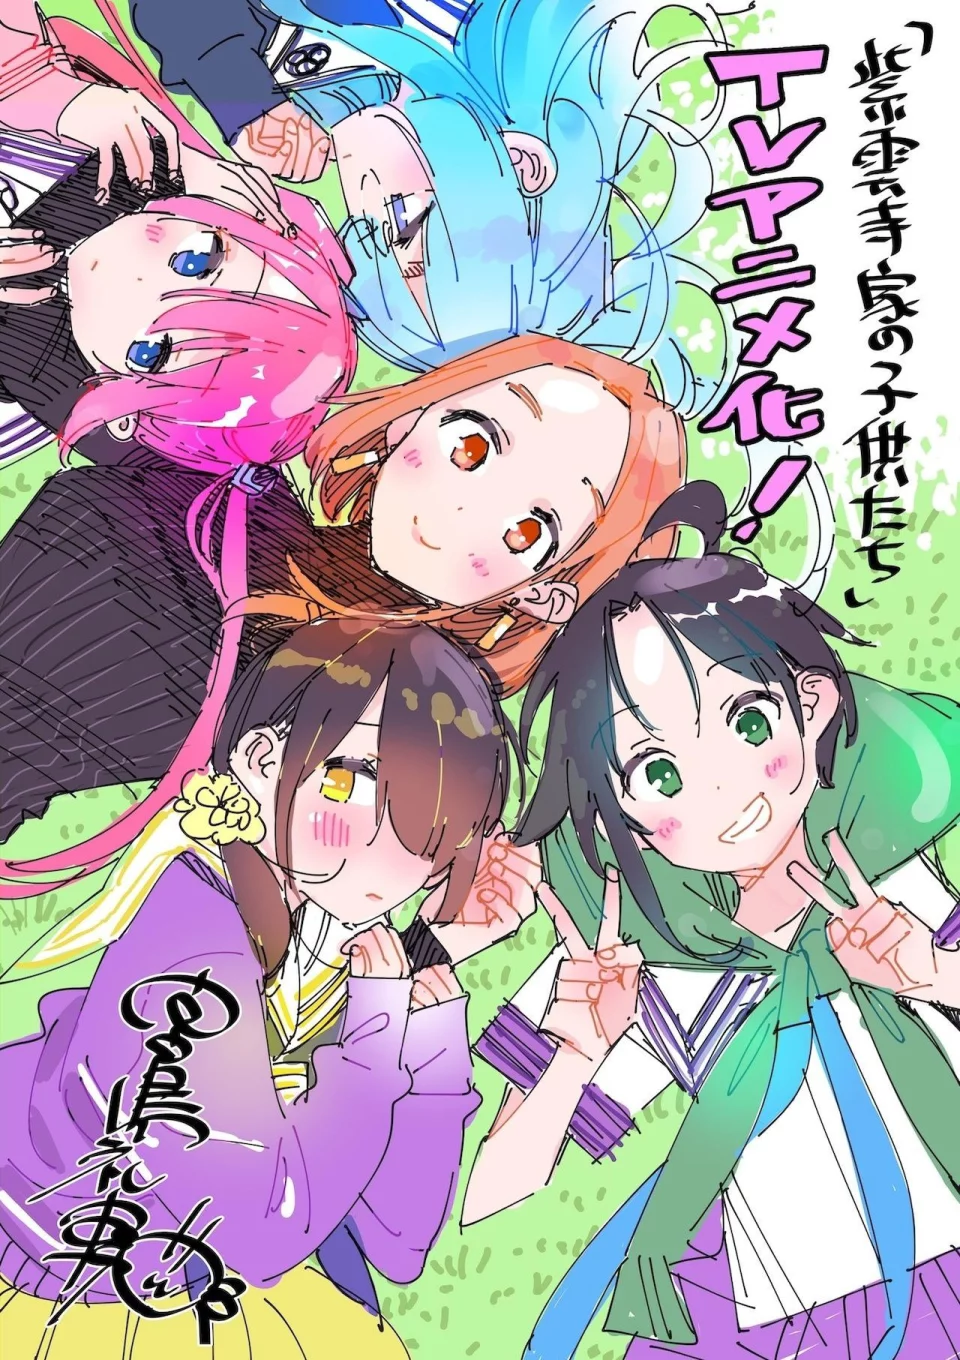 From Kanojo author Okarishimasu, The Shiunji Family Children will have anime